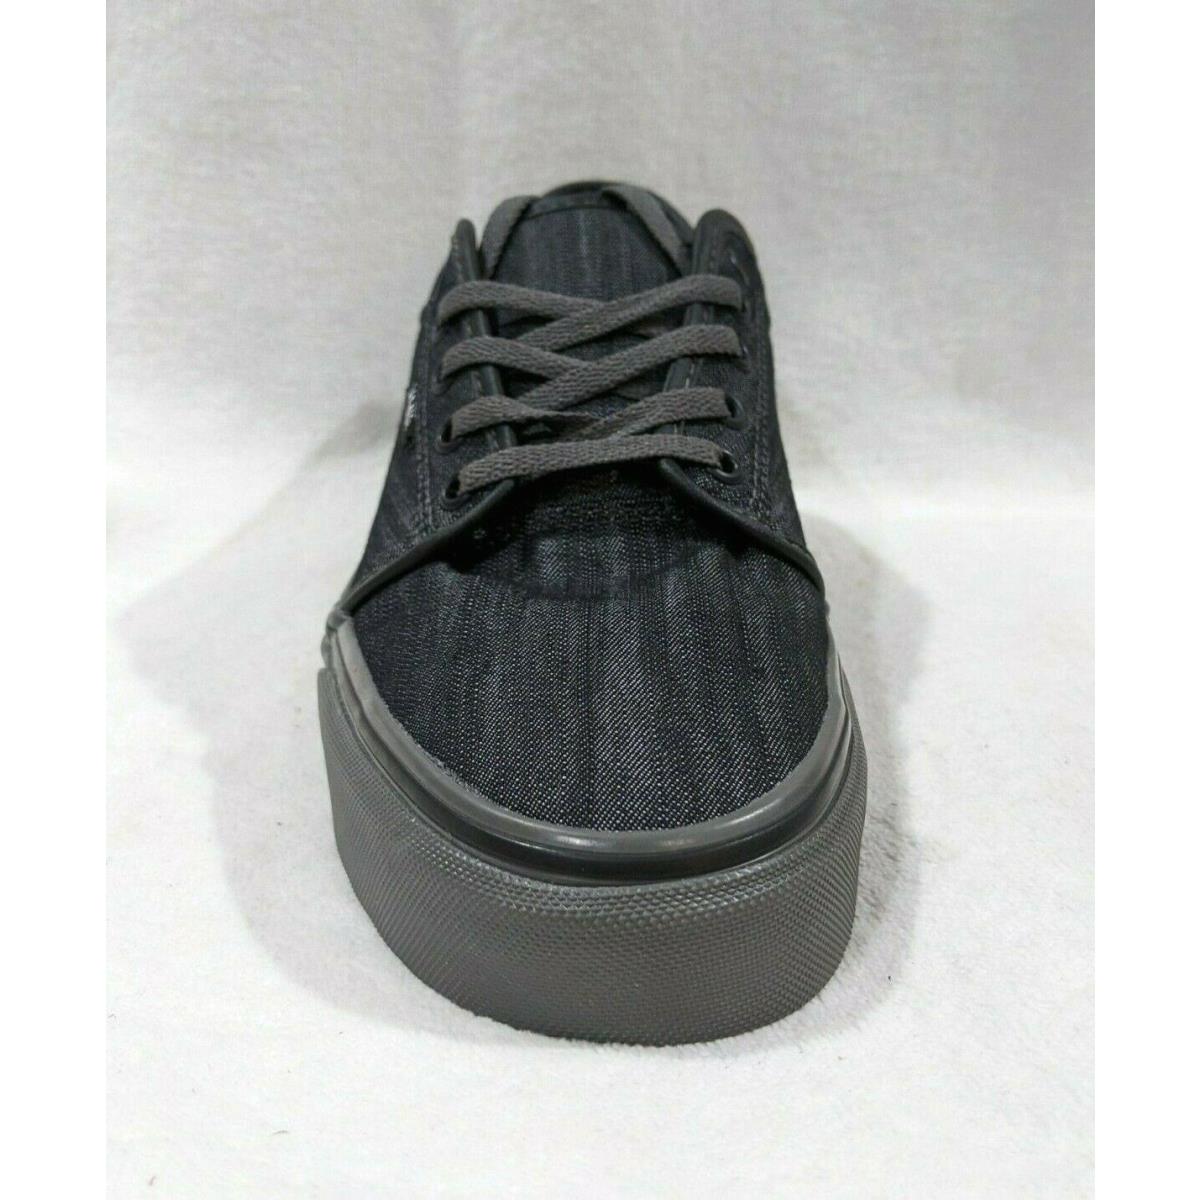 Vans shoes Chukka Low - Black 2